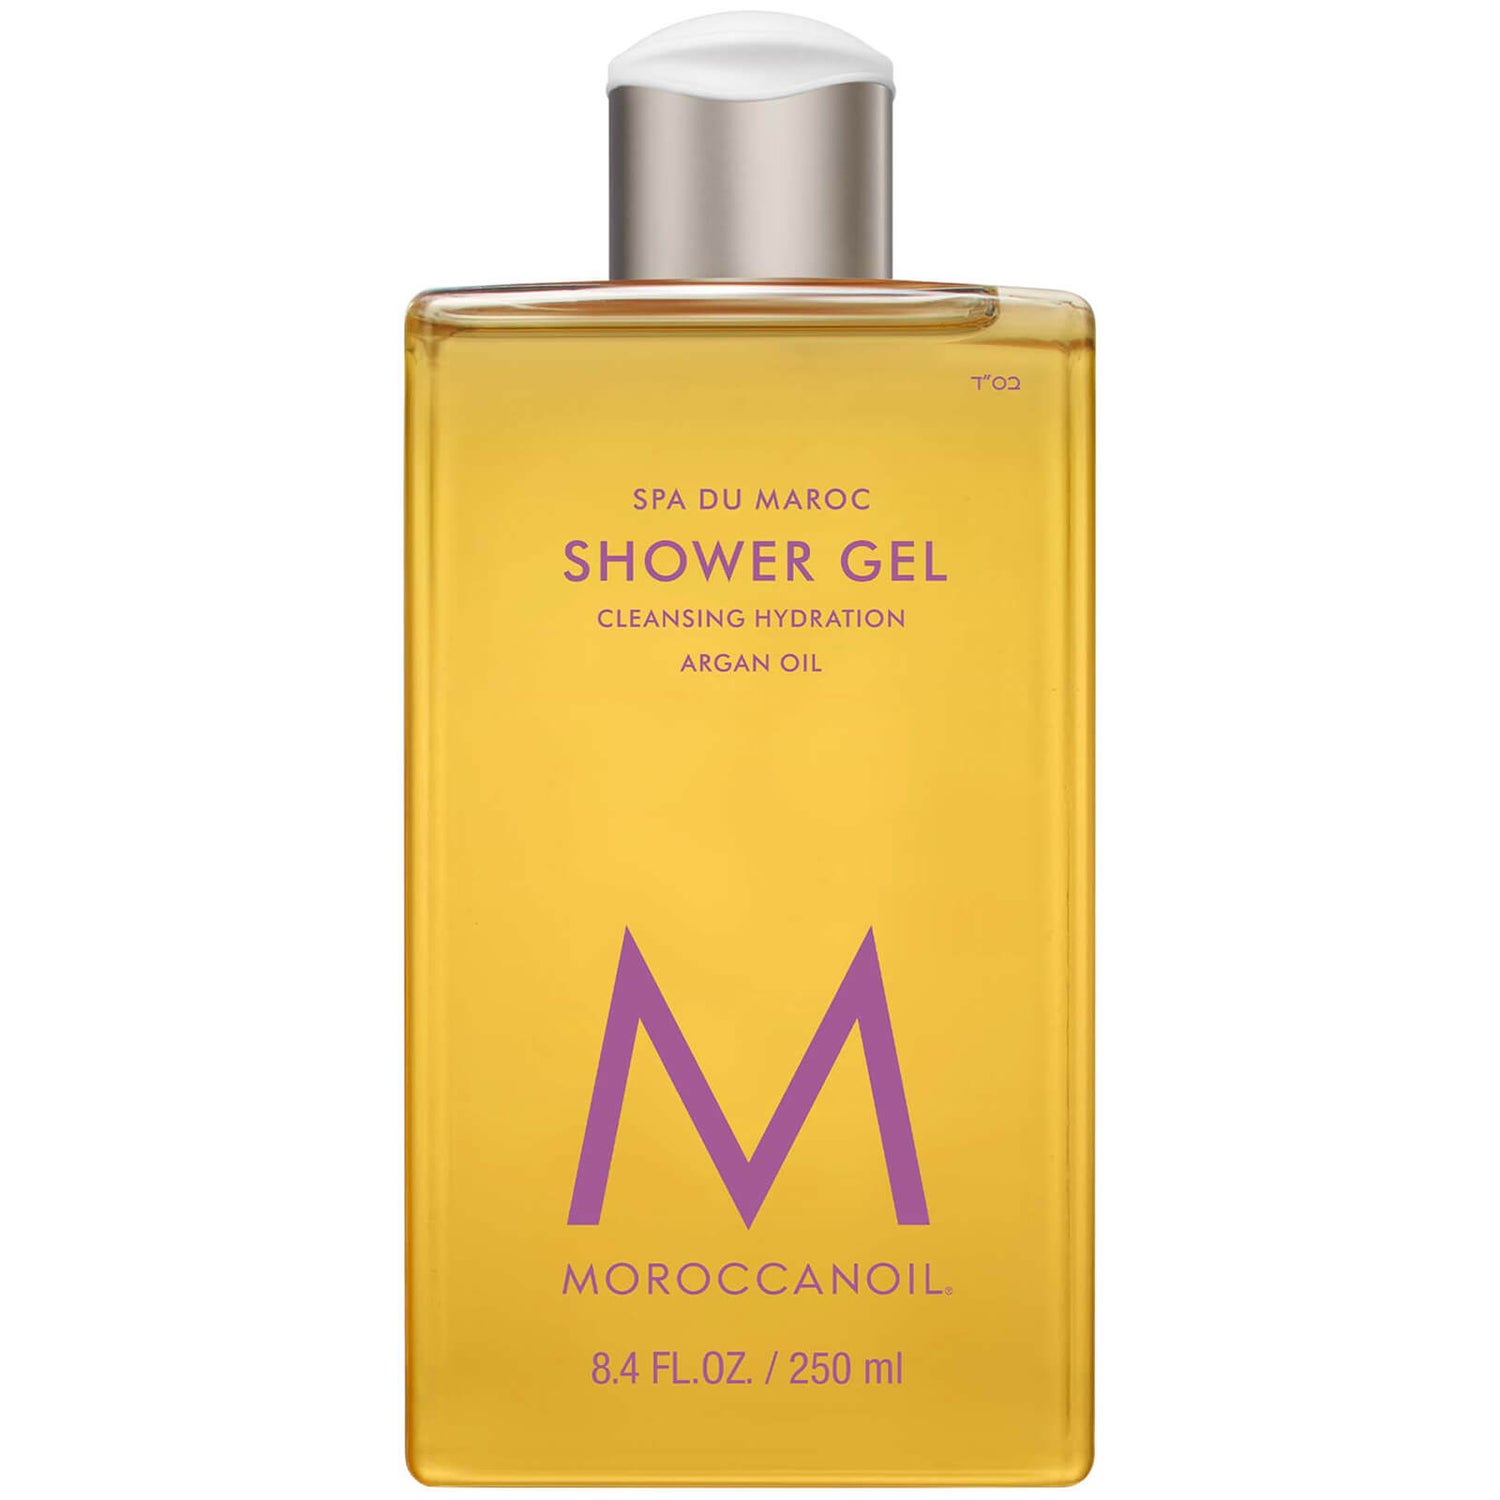 Moroccanoil Shower Gel Spa Du Maroc 8.4 oz